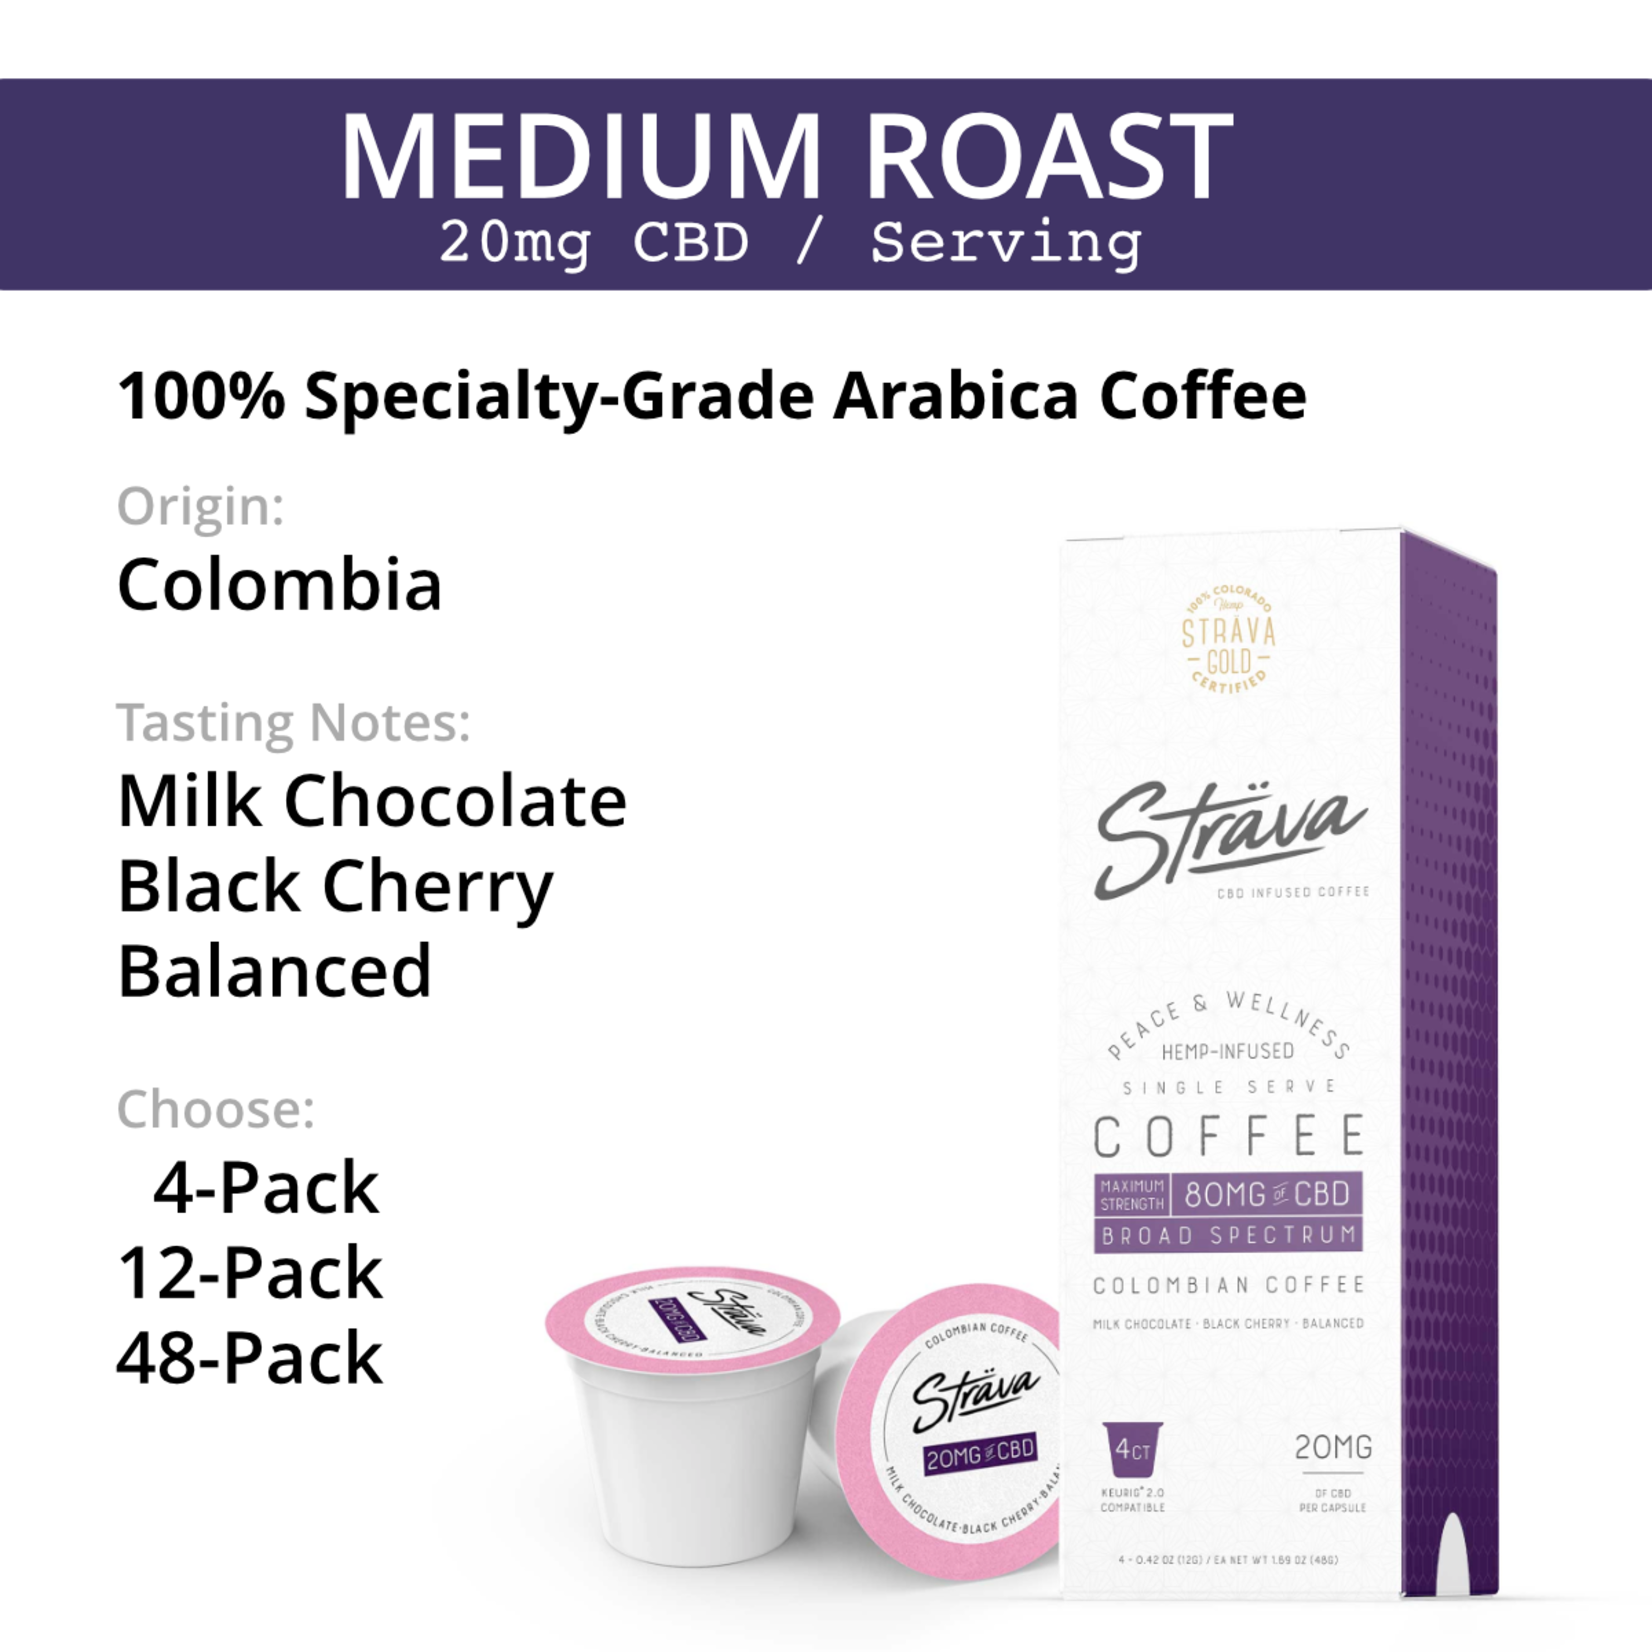 Strava Strava CBD Infused Coffee 80mg Broad Spectrum Single Serve Keurig cup maximum Strength Columbian coffee